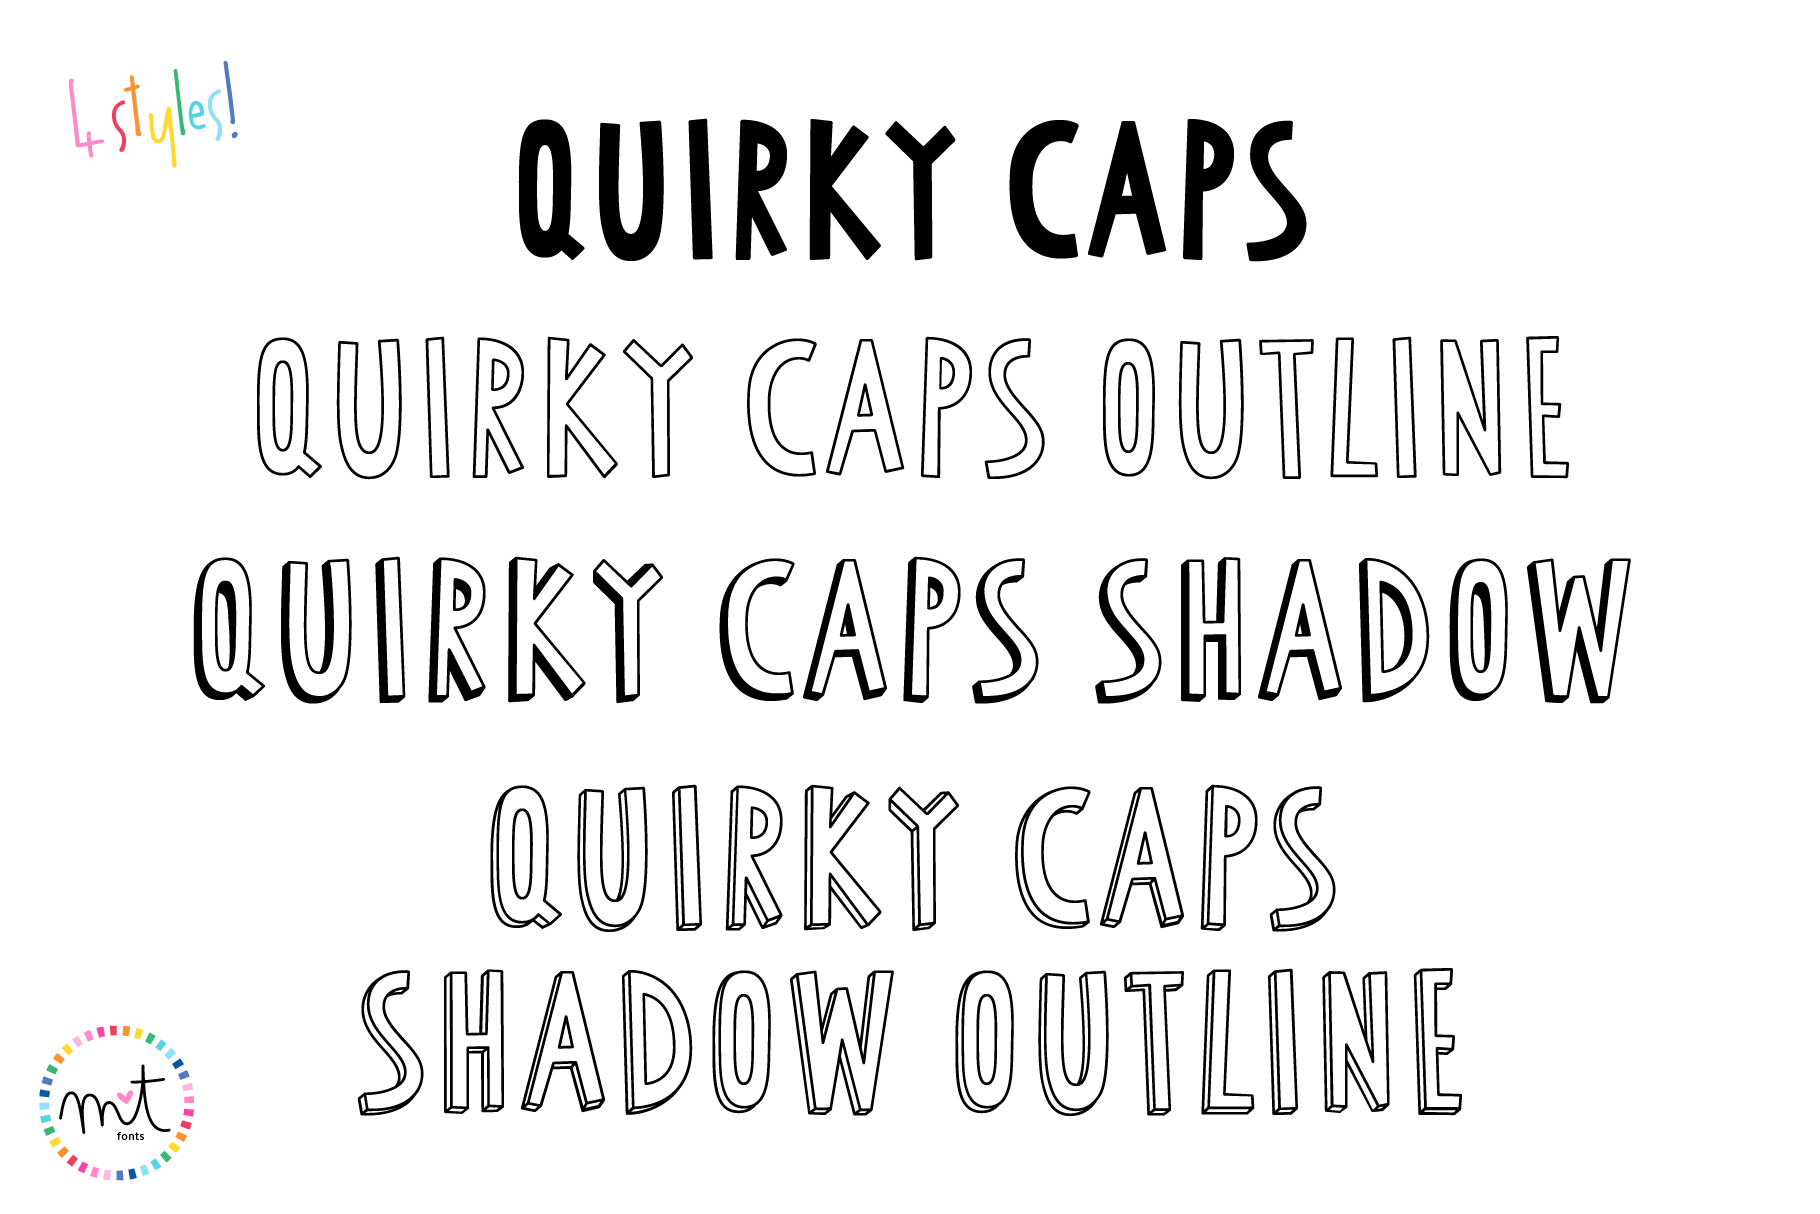 Quirky Caps